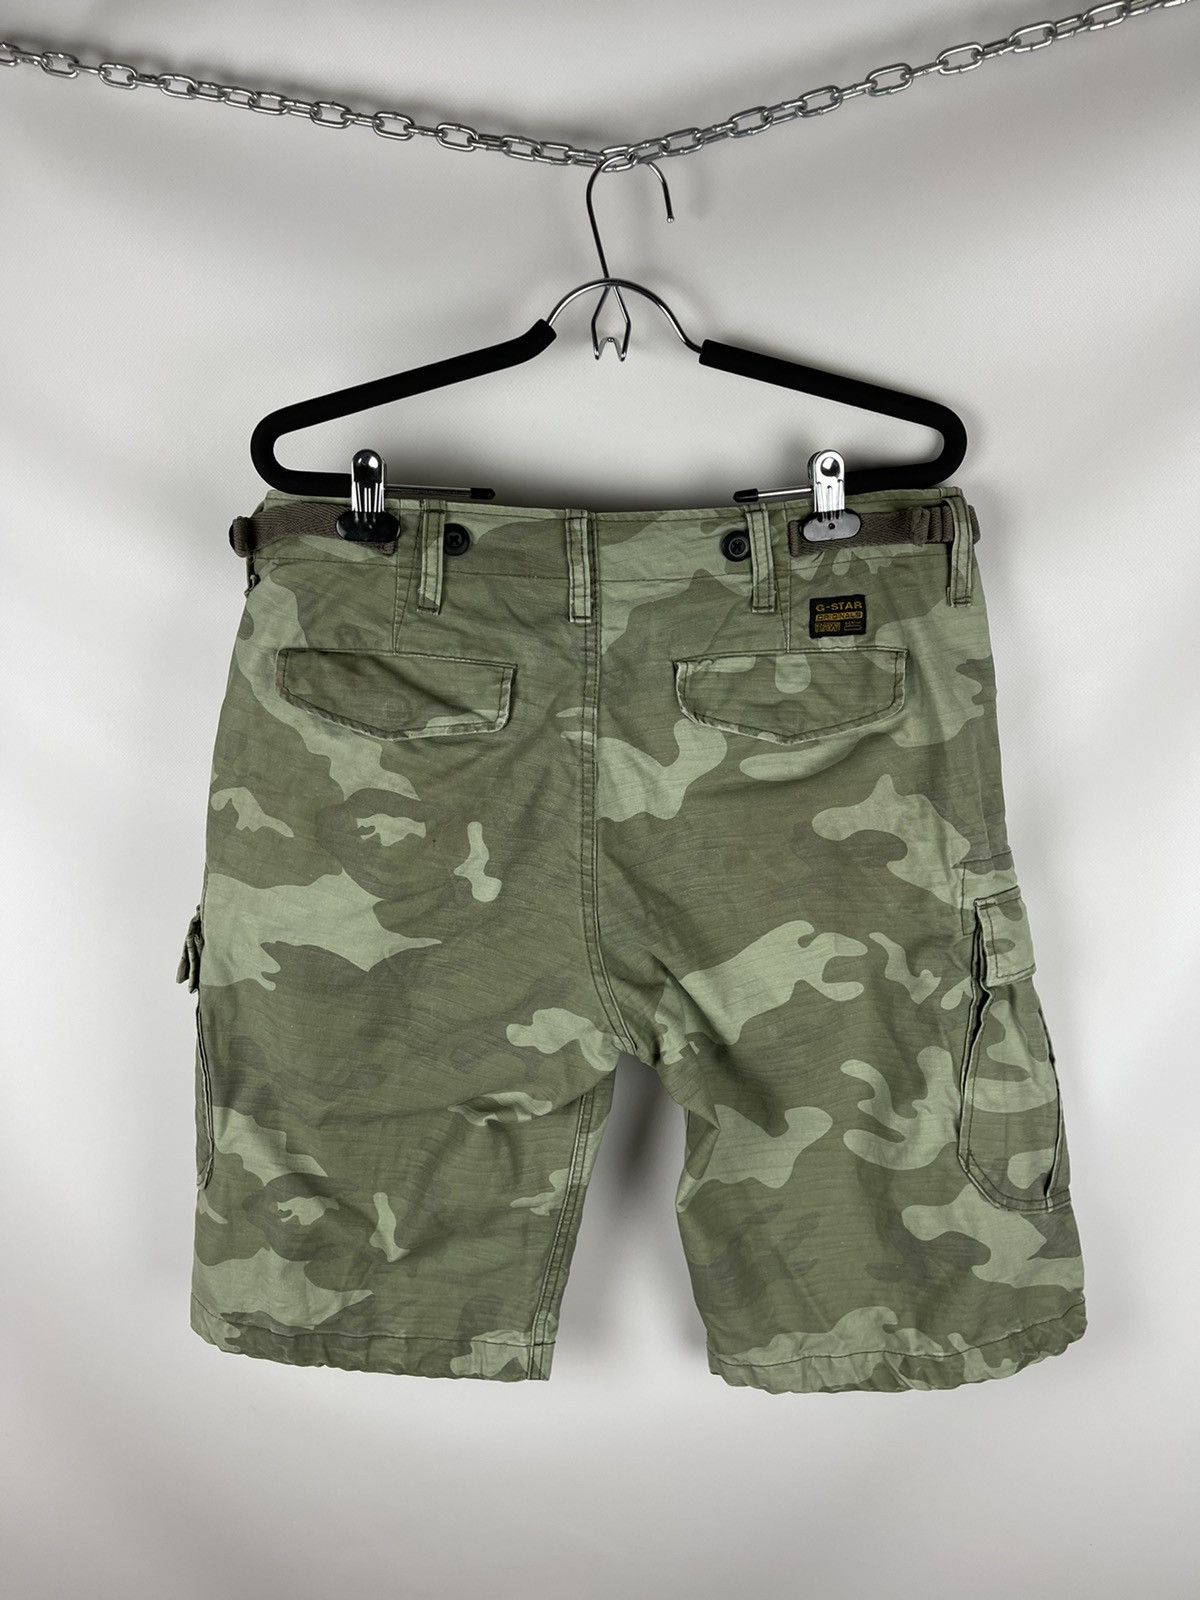 G Star Raw G-Star Raw Original Battle pants 1/2 camo cargo shorts | Grailed